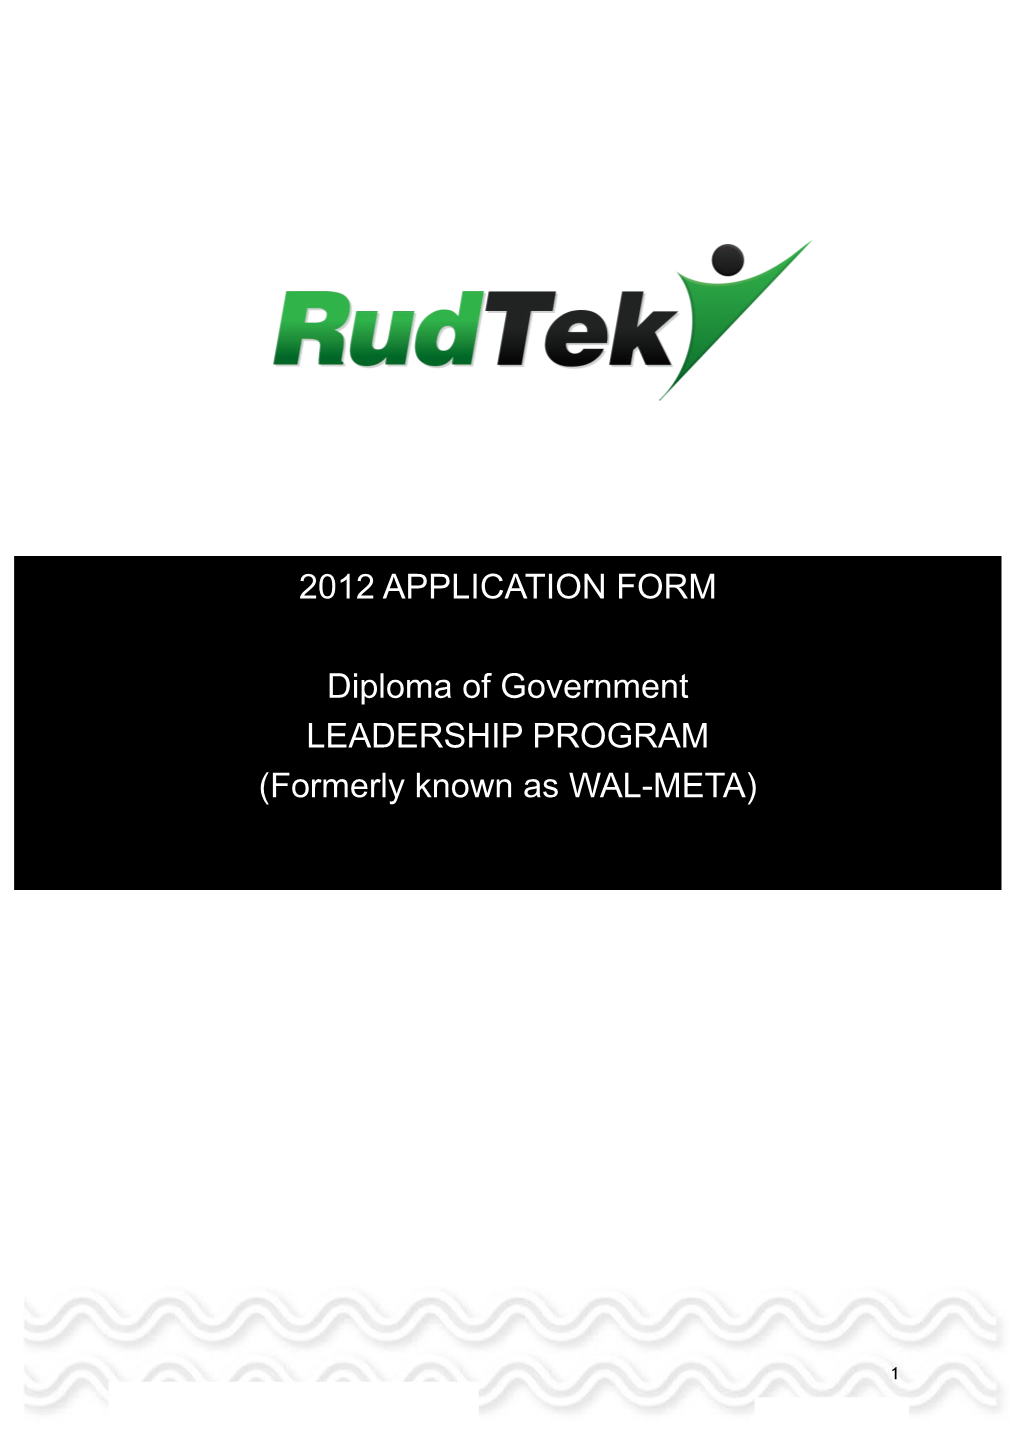 Leadership Program Application Form 2012